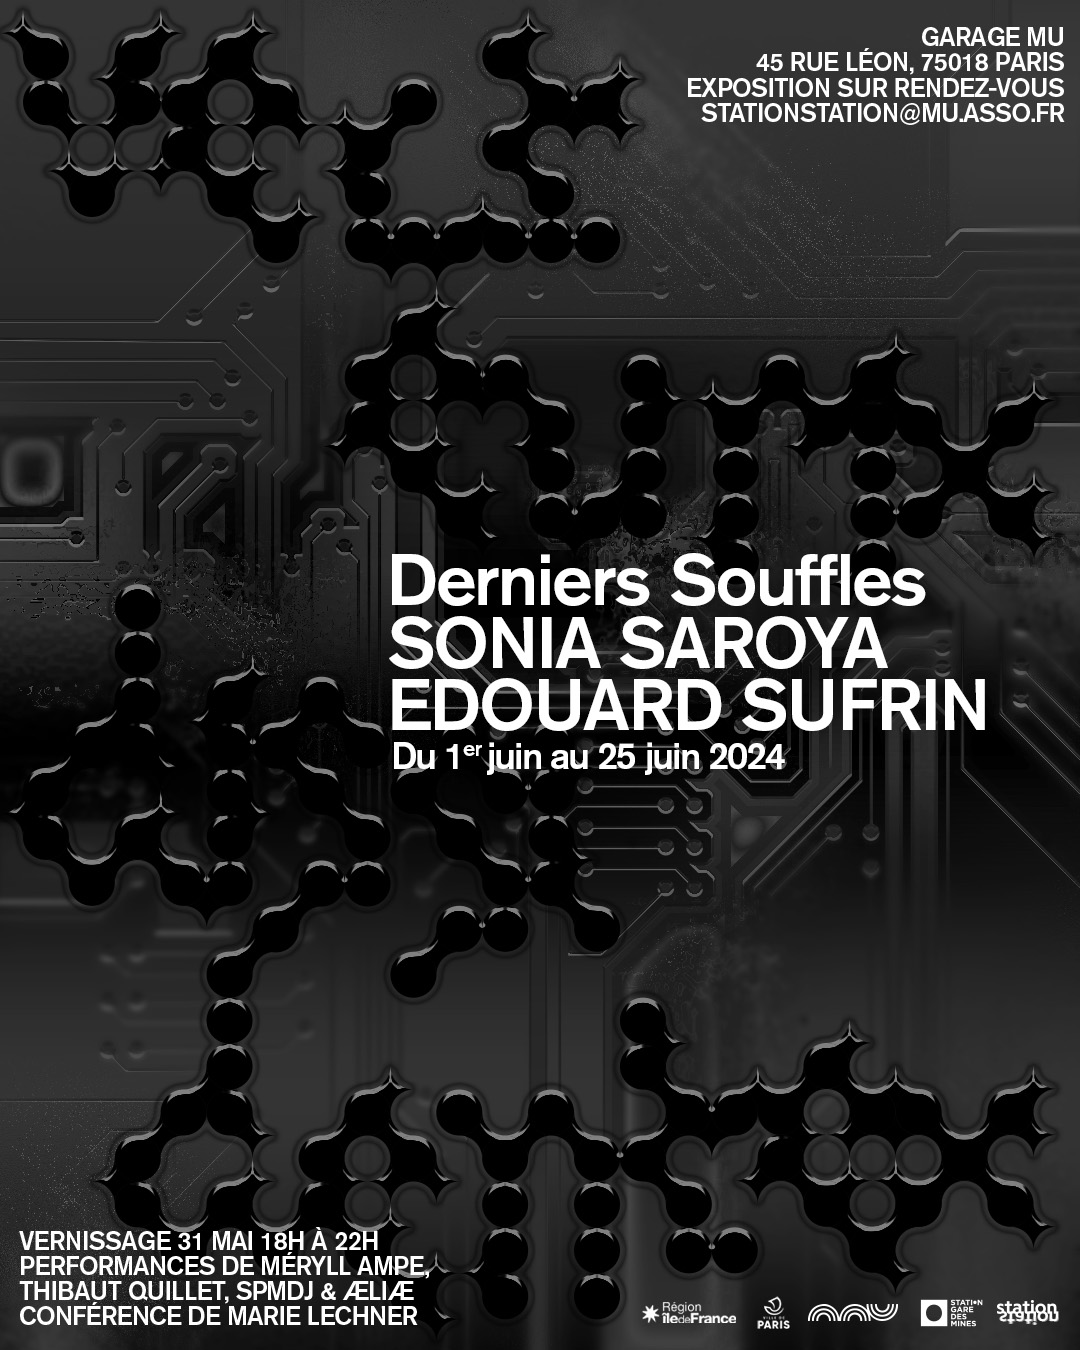 Derniers Souffles Edouard Sufrin Sonia Soraya Manon Schaefle, Derniers Souffles, Bad to the Bone